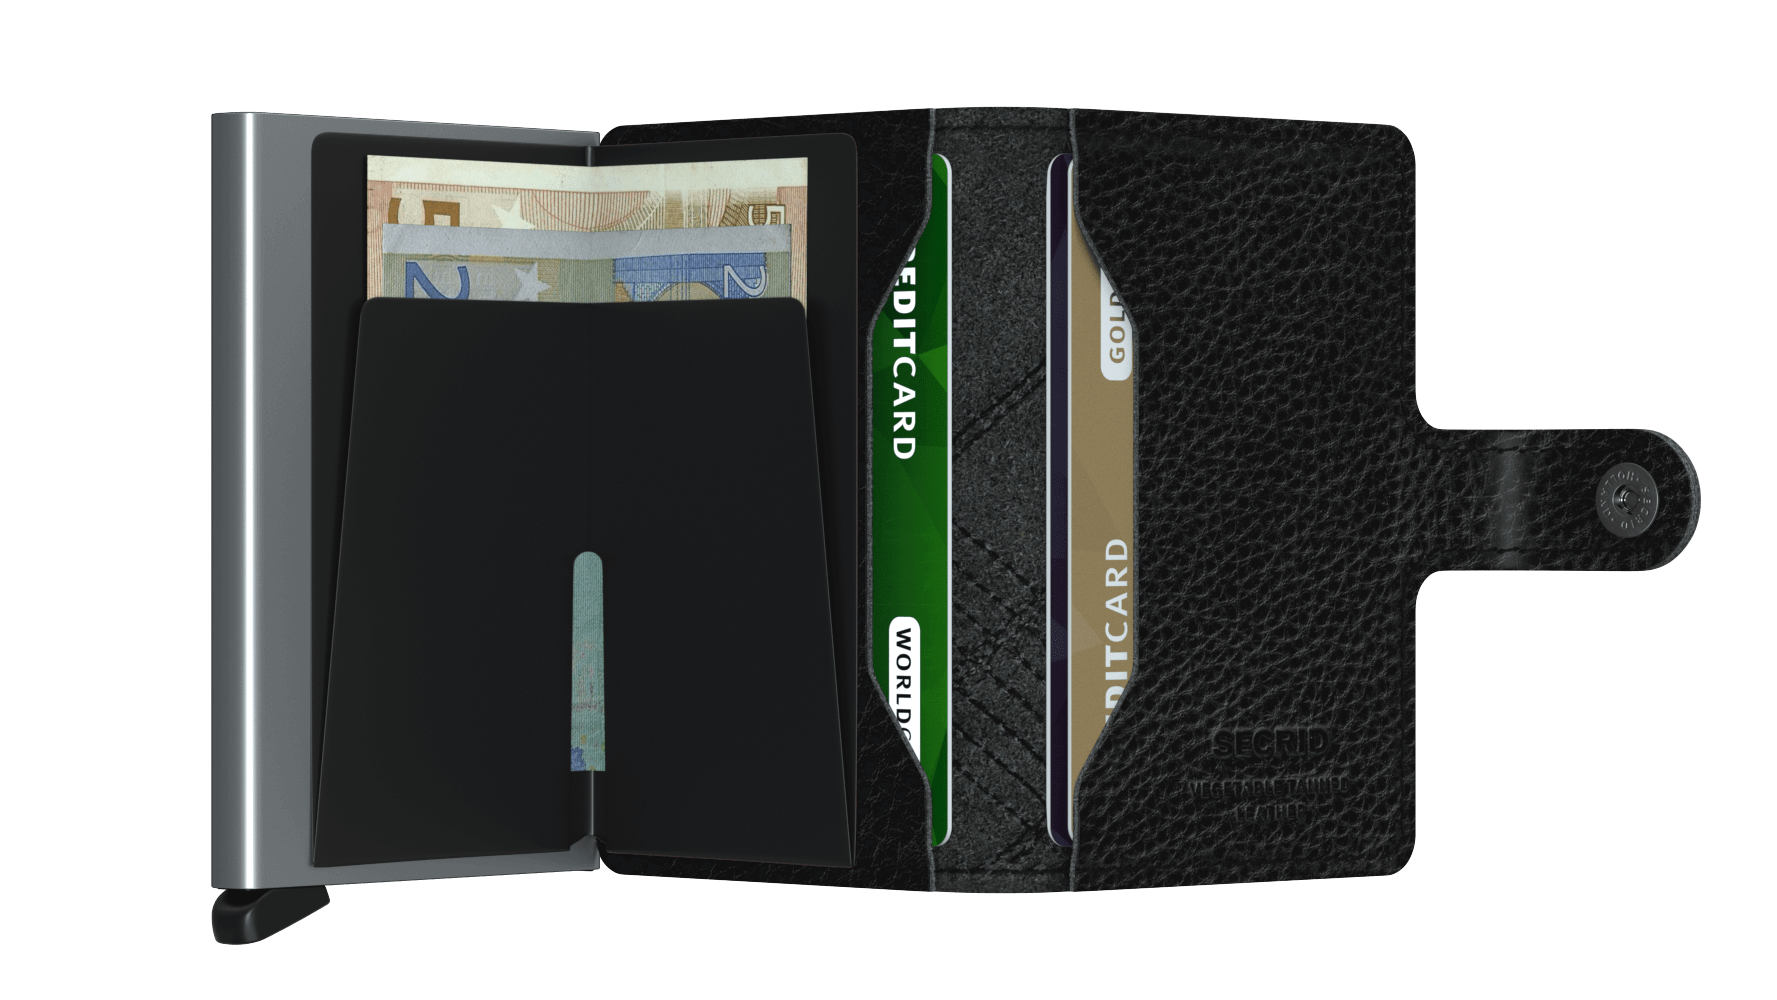 Miniwallet | Stitched Linea Black Leather | by Secrid Wallets - Lifestory - Secrid Wallets